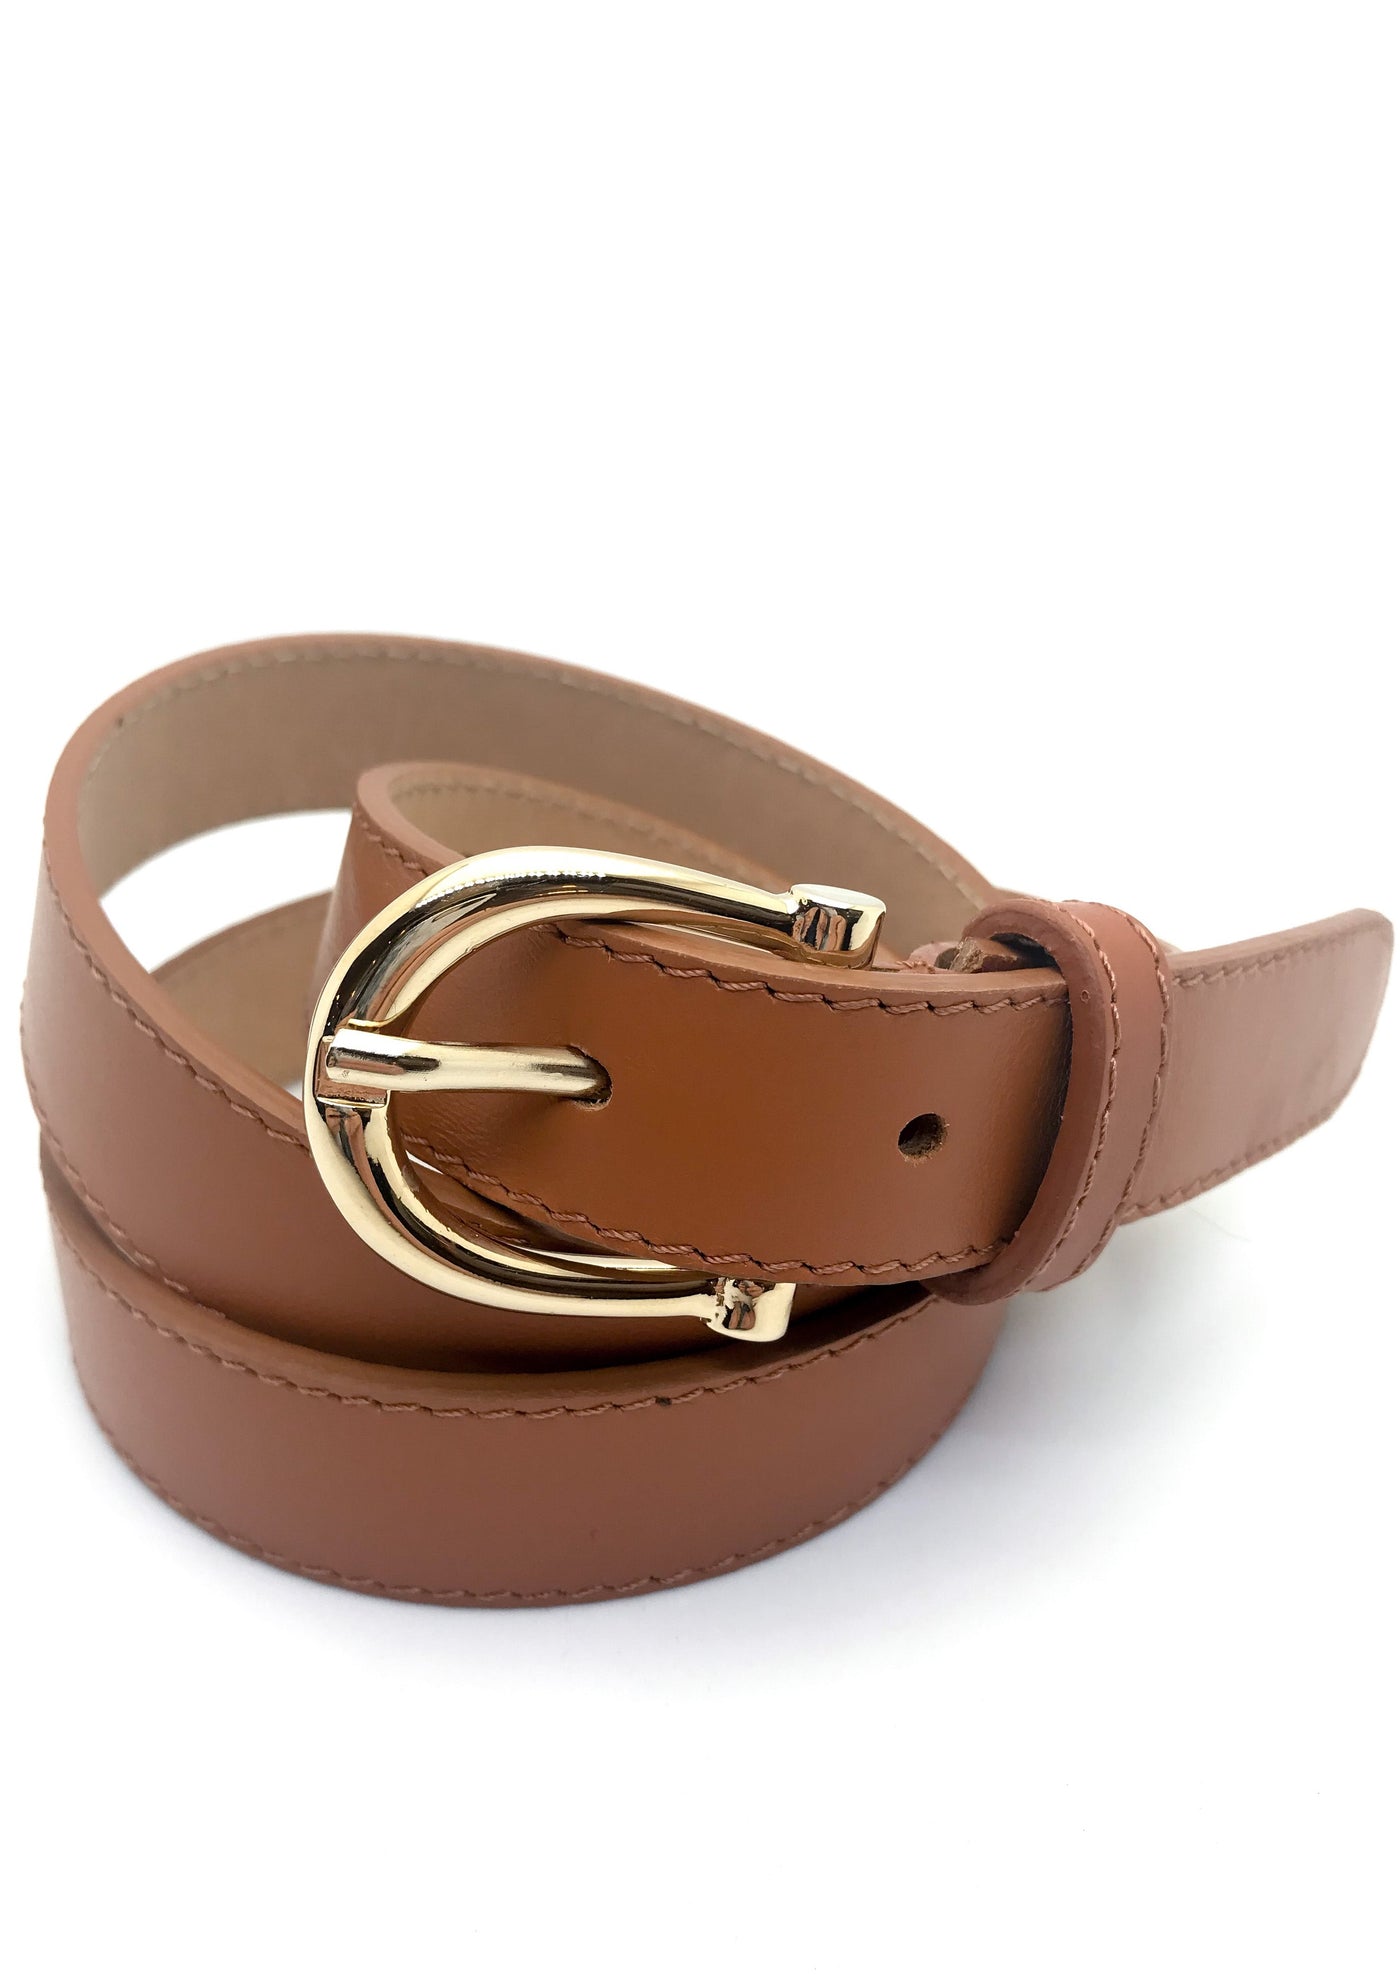 Brown Skinny Leather Belt